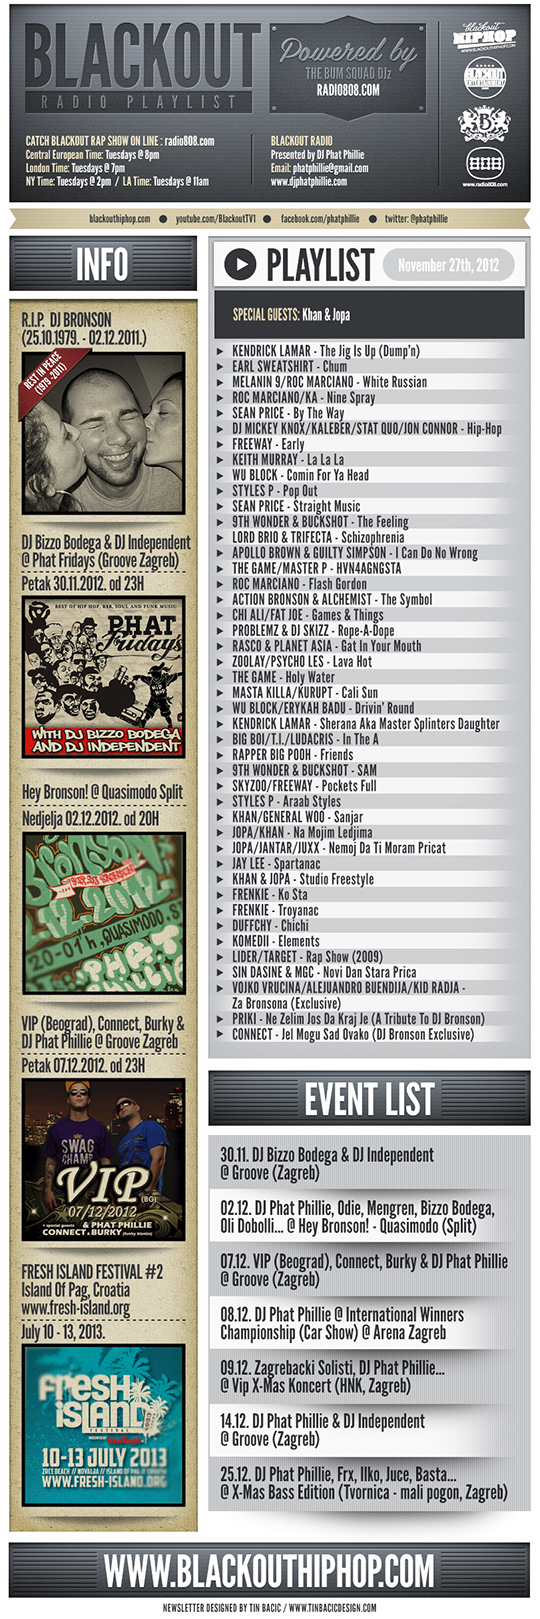 Blackout Radio Playlist & DL Links (Nov 27th, 2012)